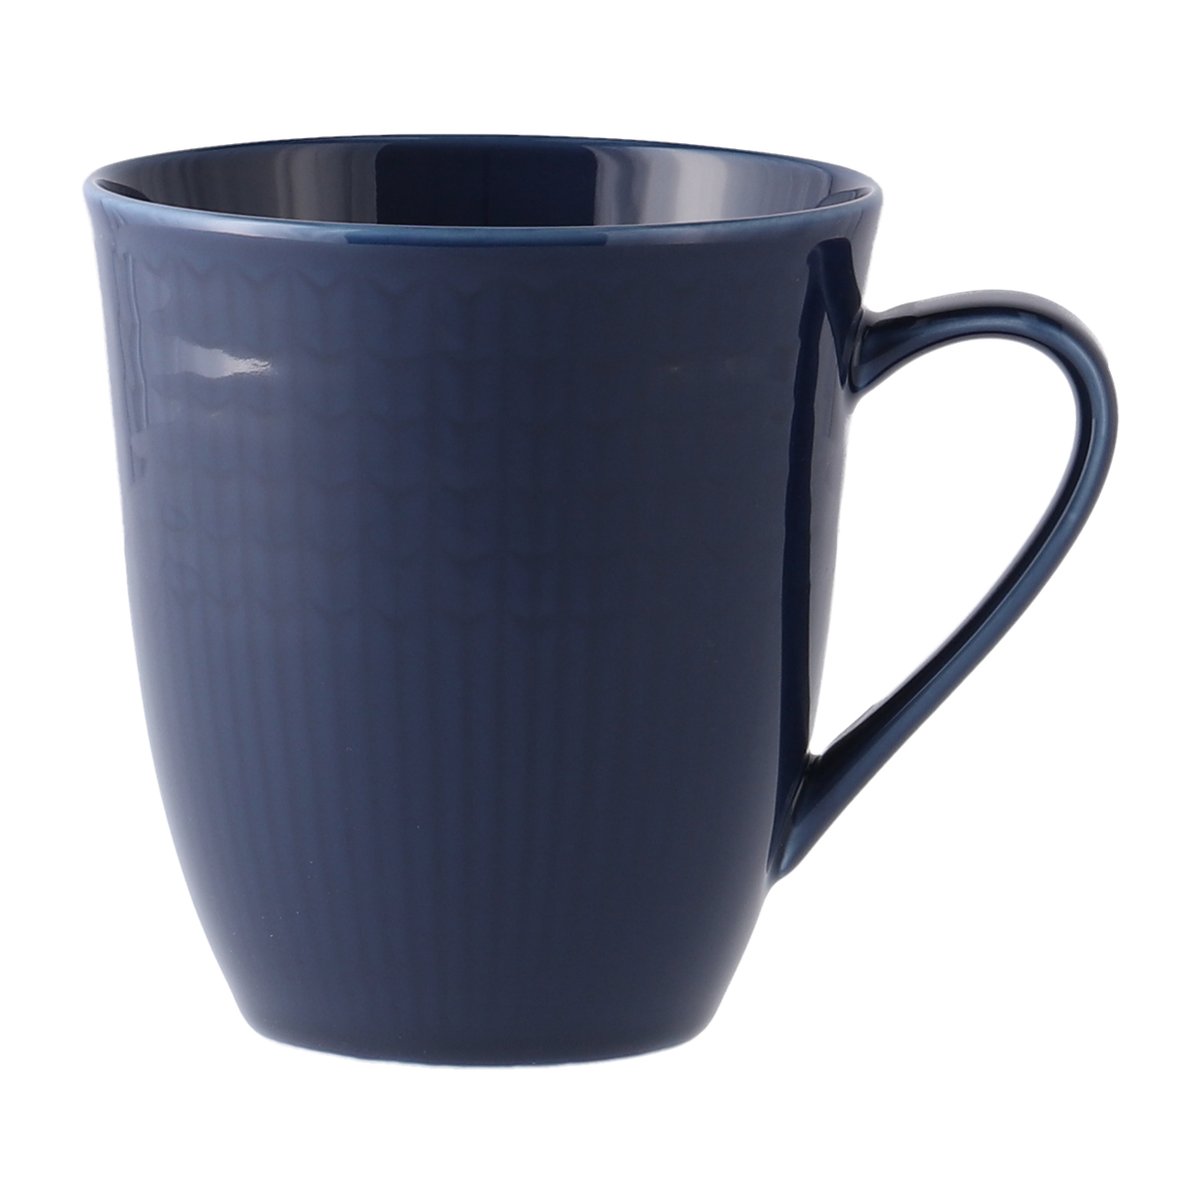 rörstrand mug swedish grace bleu nuit